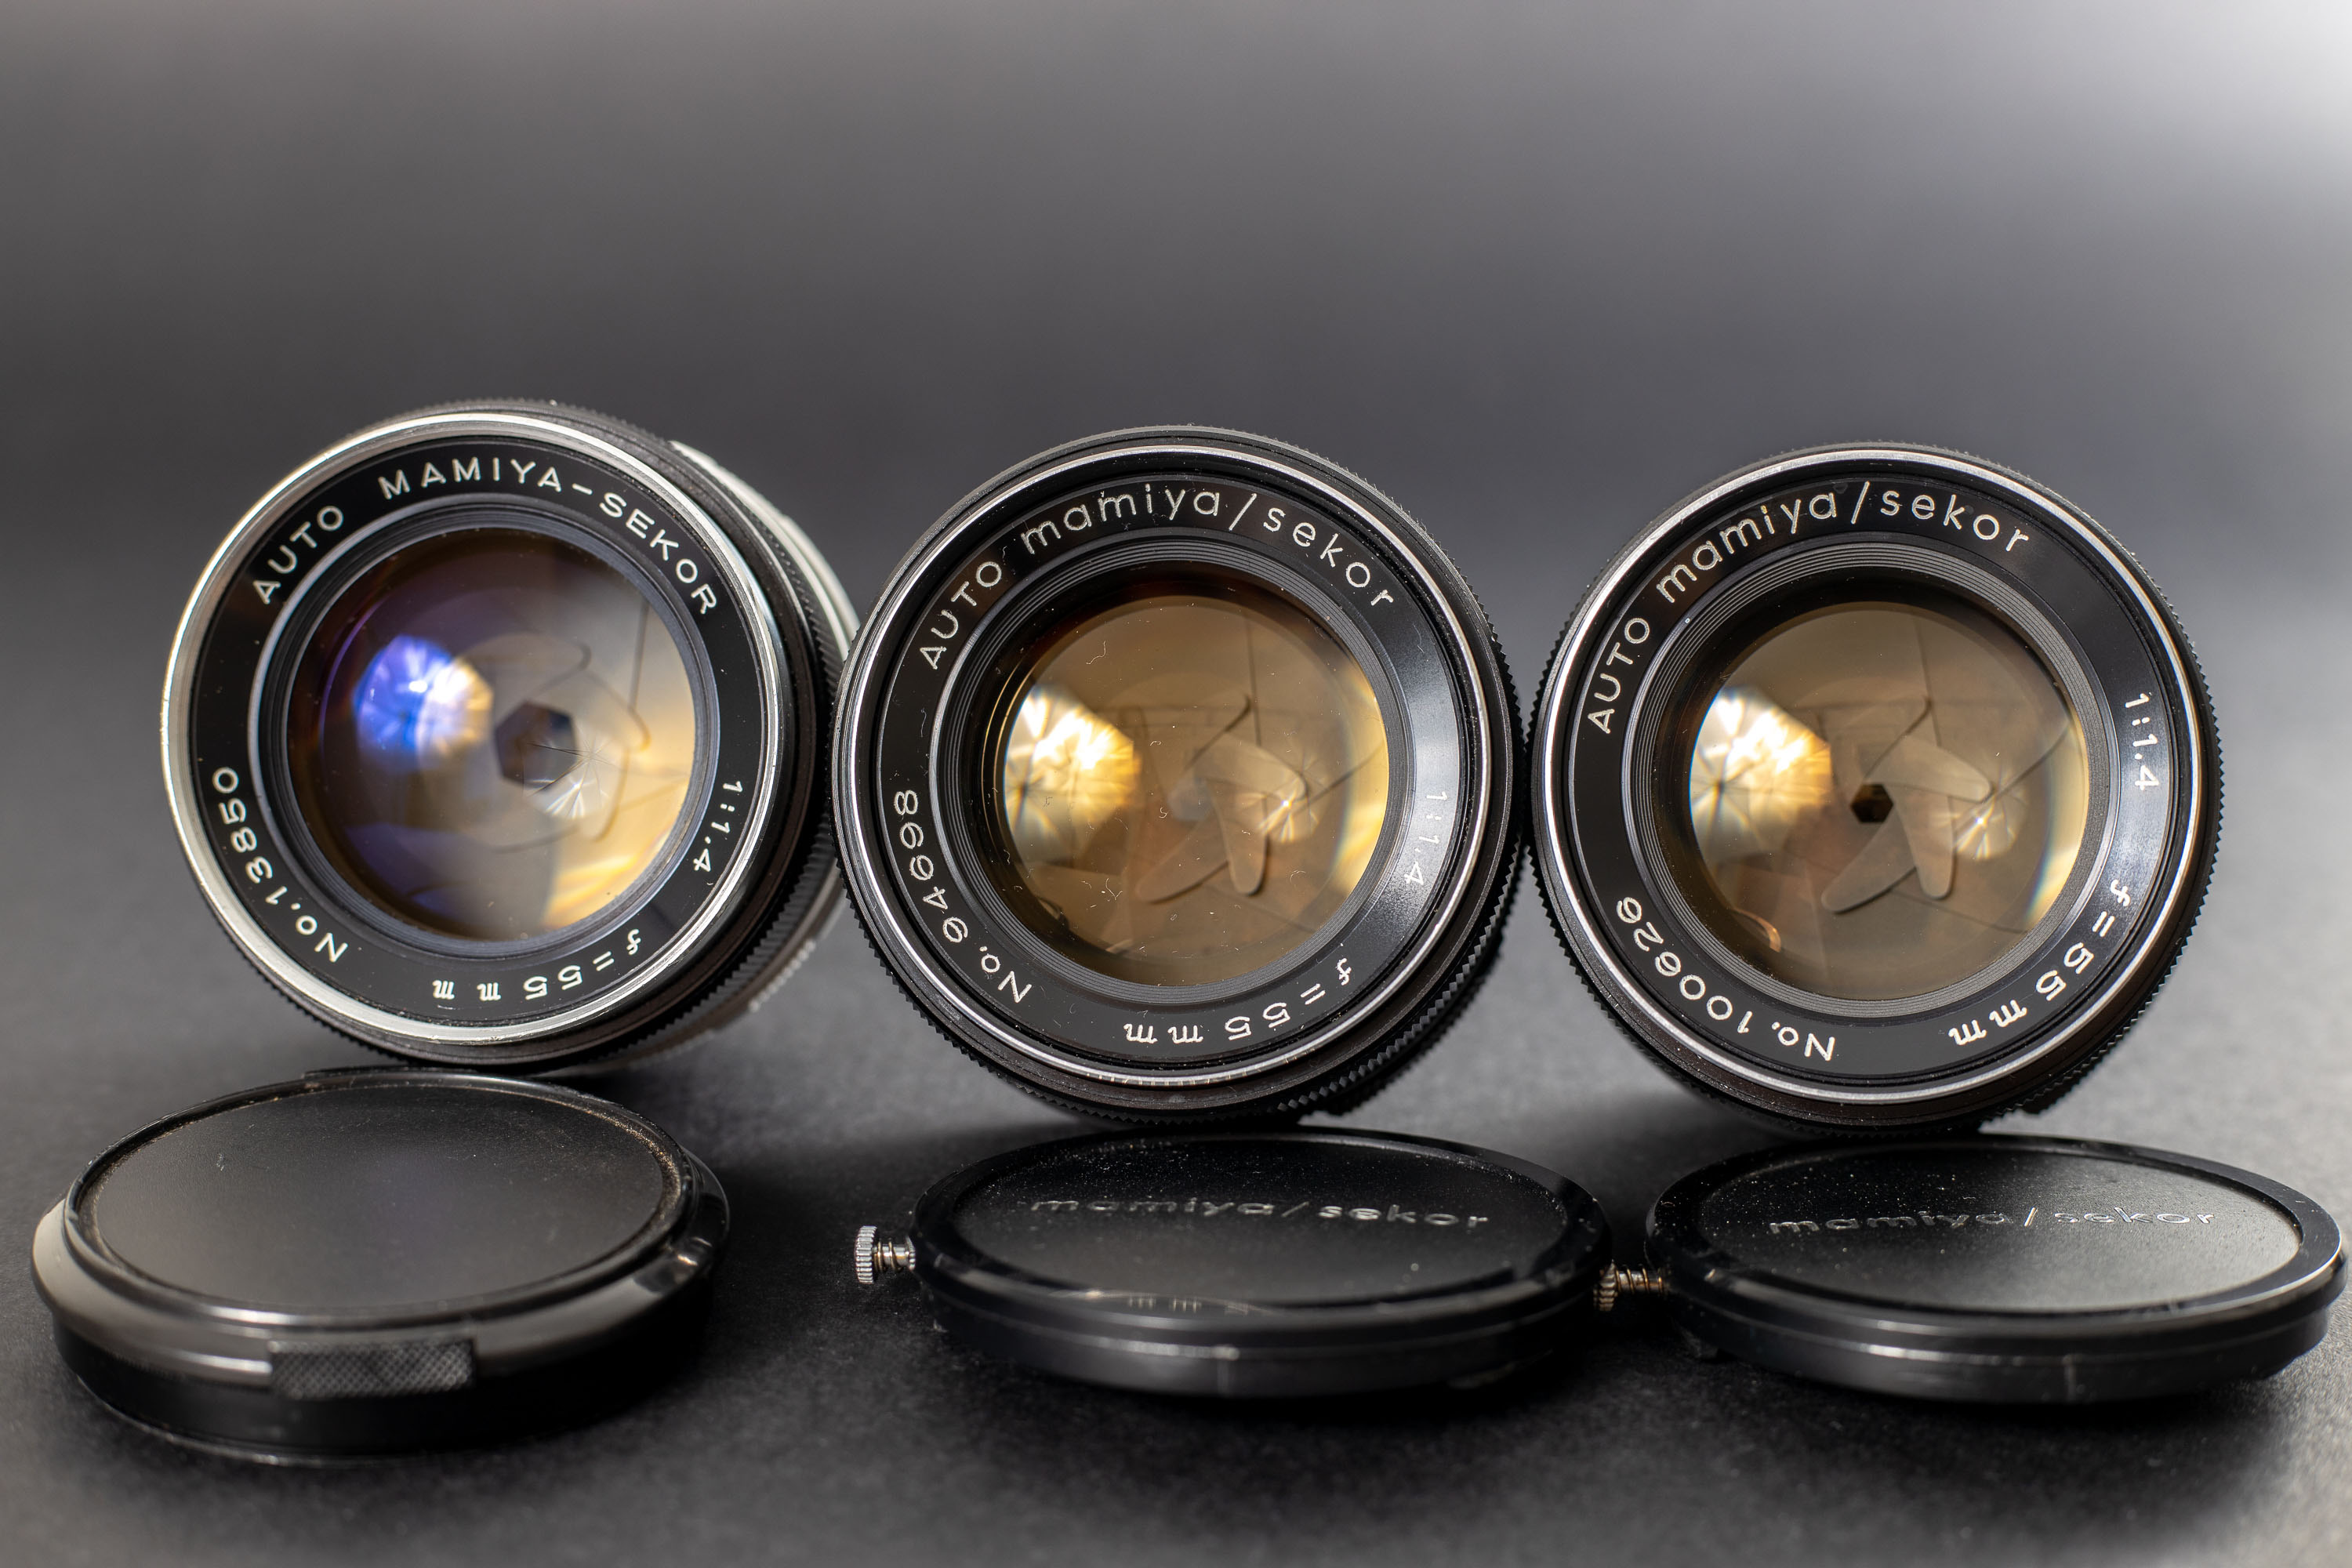 Three Mamiya Sekor 55mm f1.4 lenses - Front view. Notice that yellow tint? Thats radioactive thorium glass.